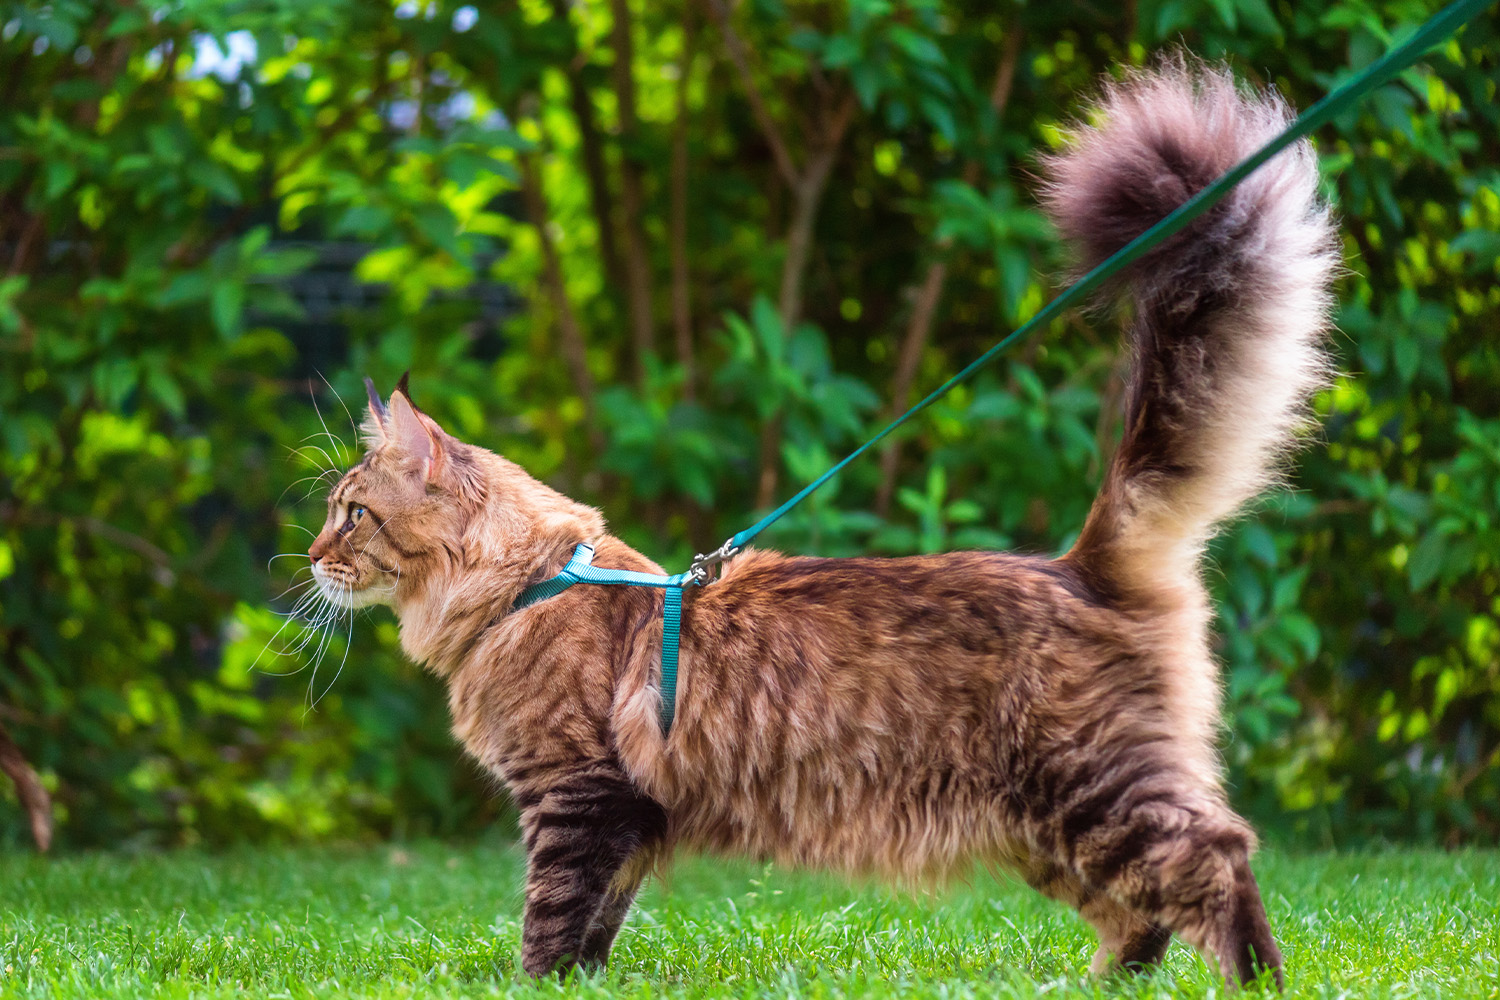 leash train your cat